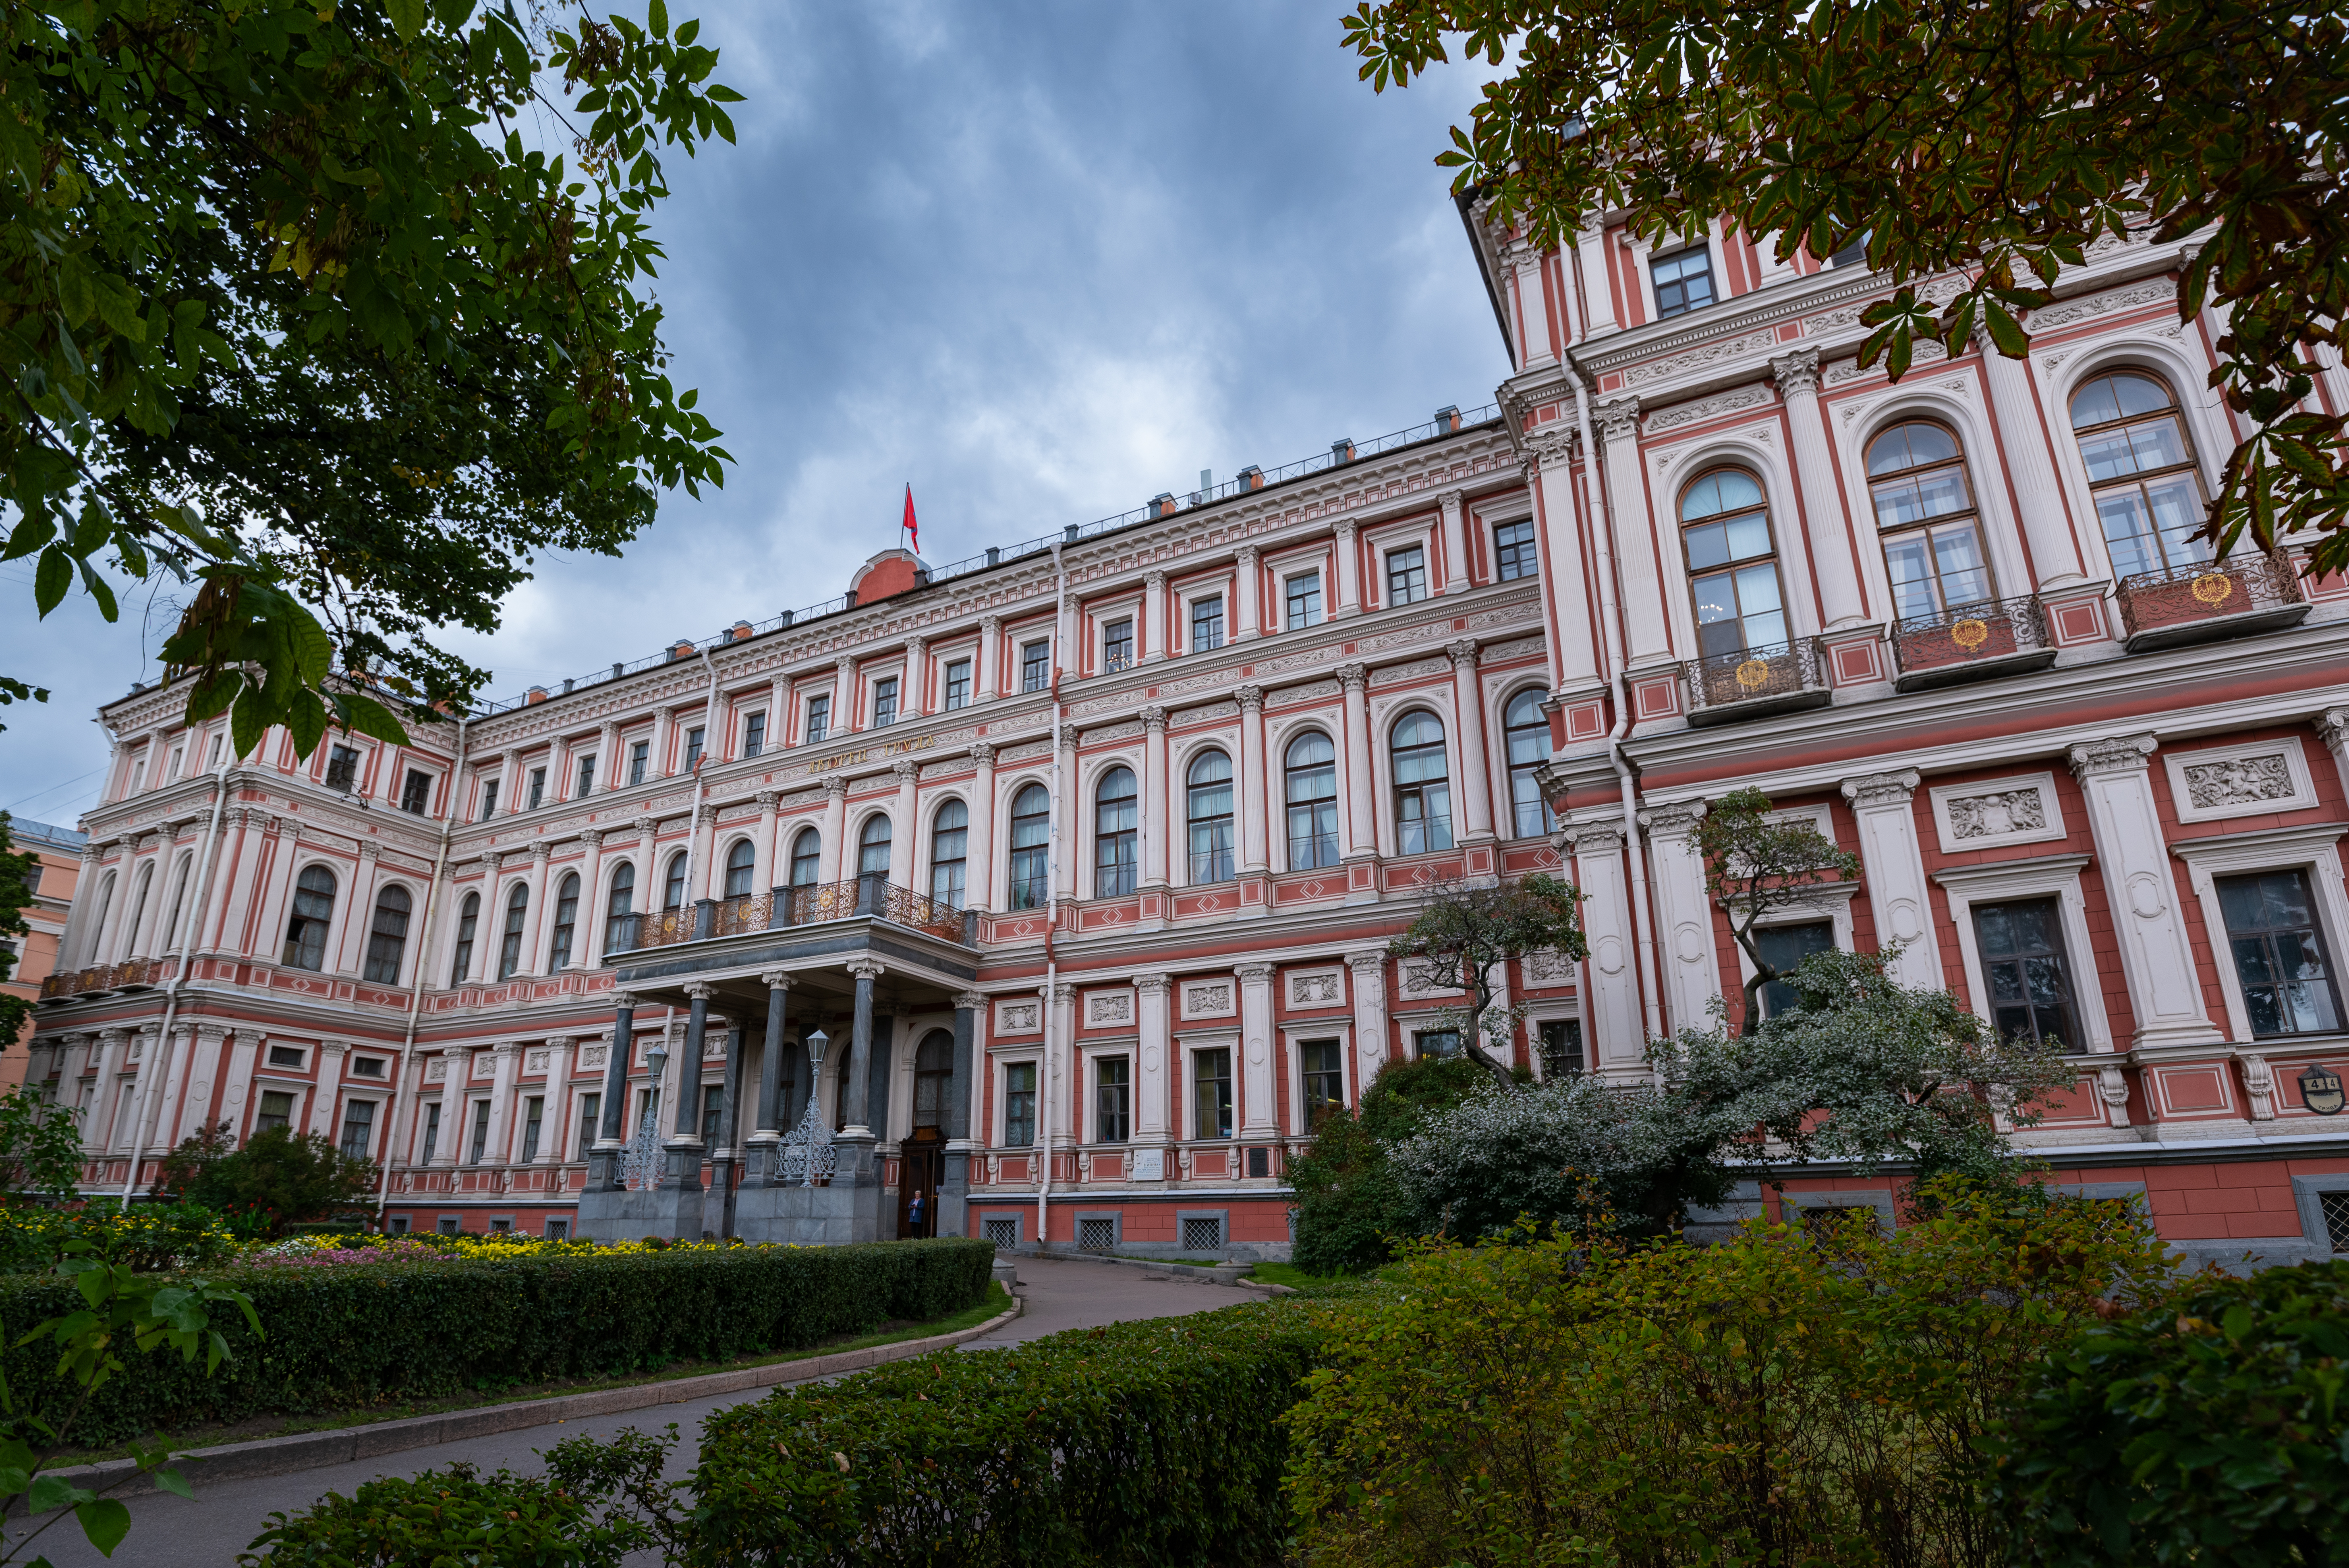 Nikolaevsky (Nicholas) Palace